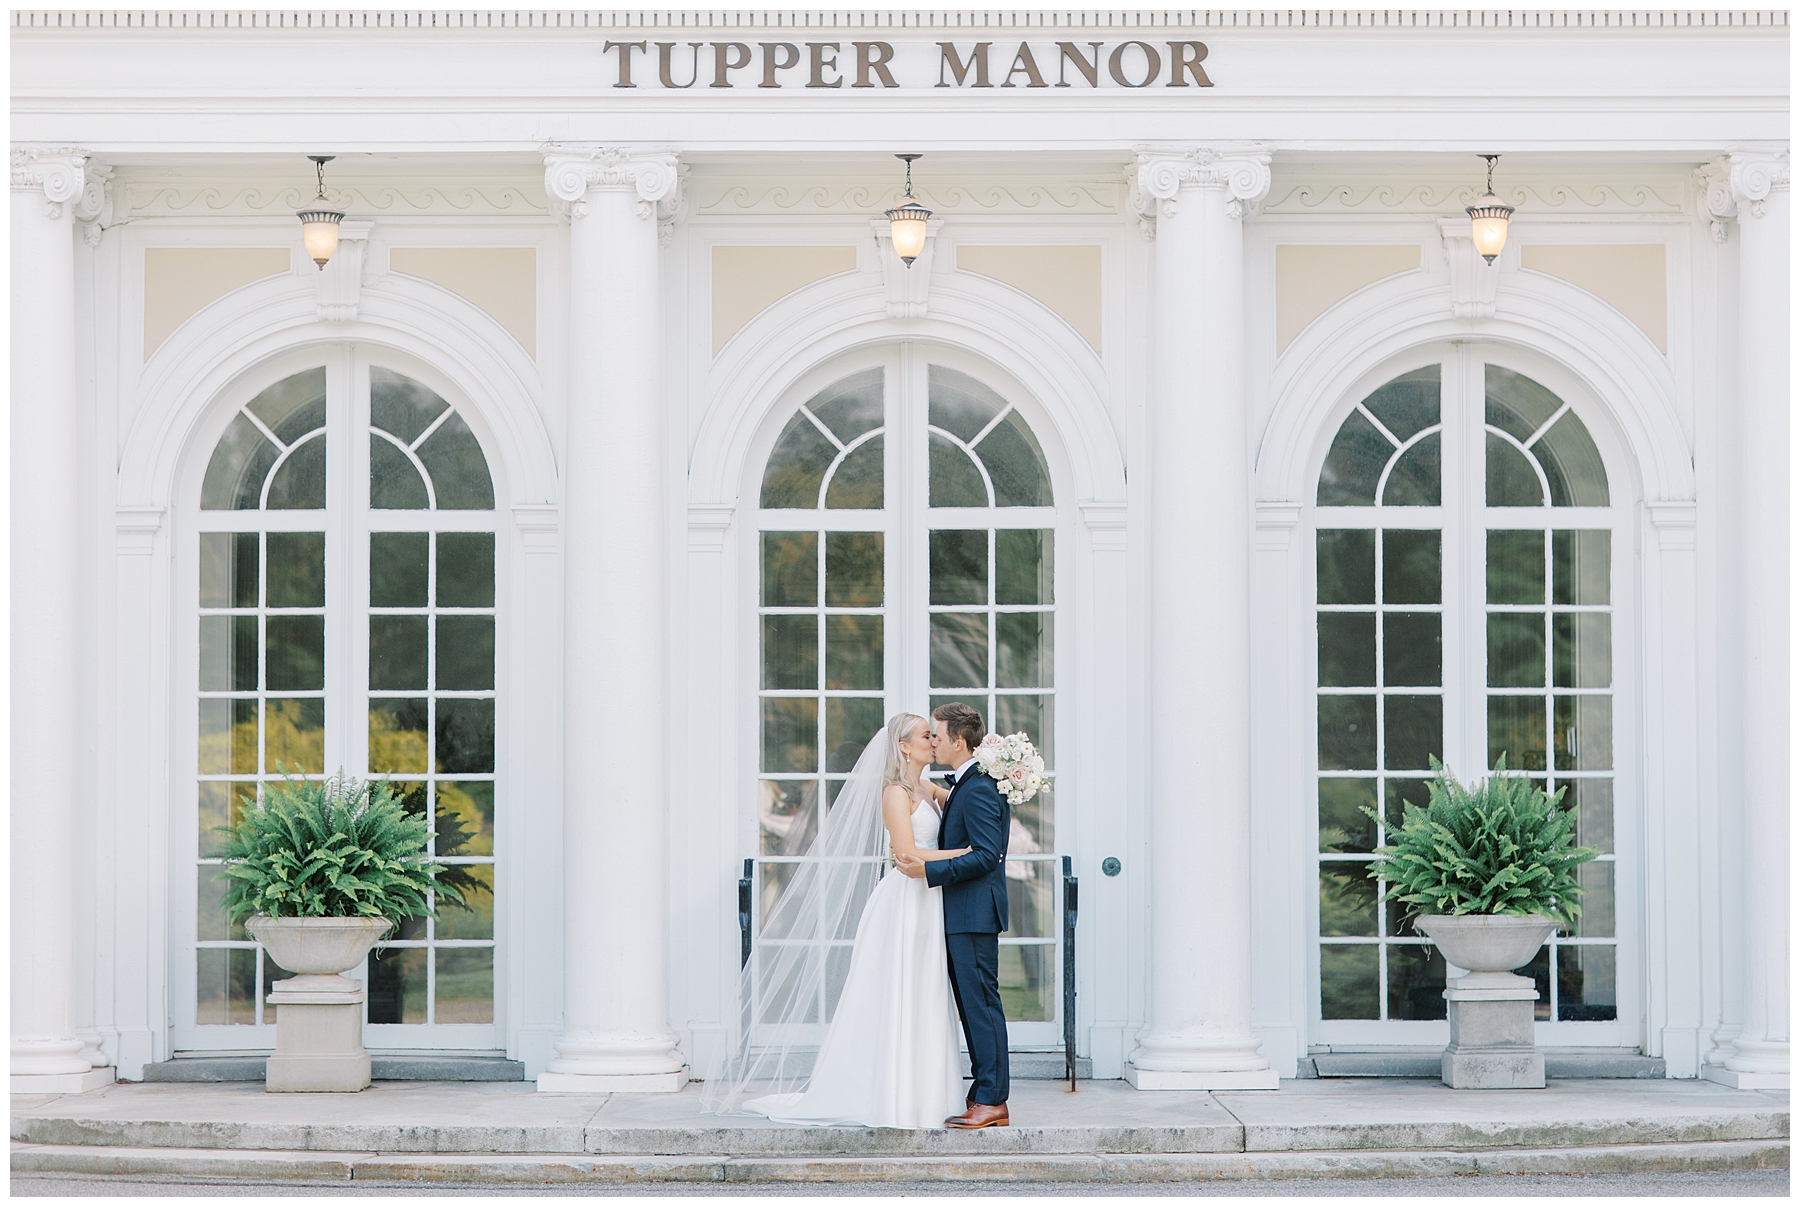 Chic + Elegant Tupper Manor Wedding photos